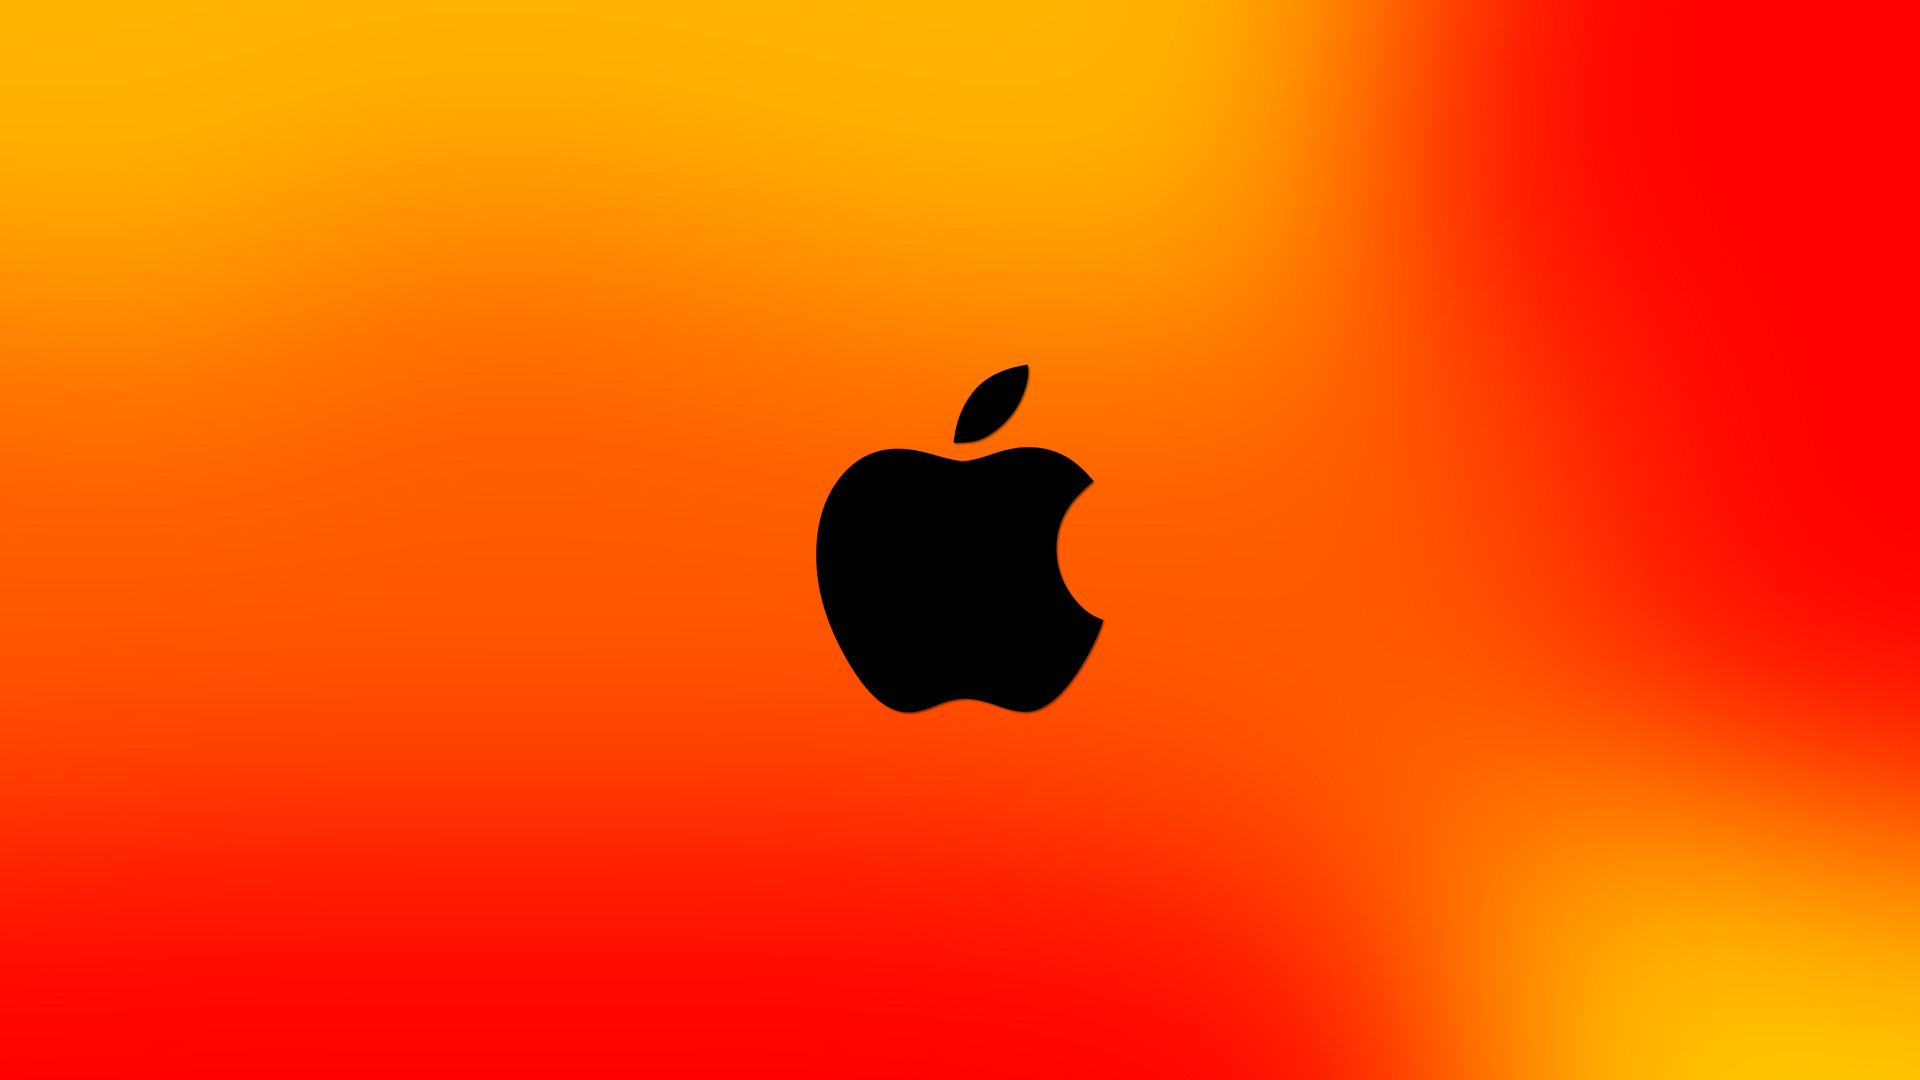 apple 1080p wallpaper,orange,red,yellow,fruit,plant